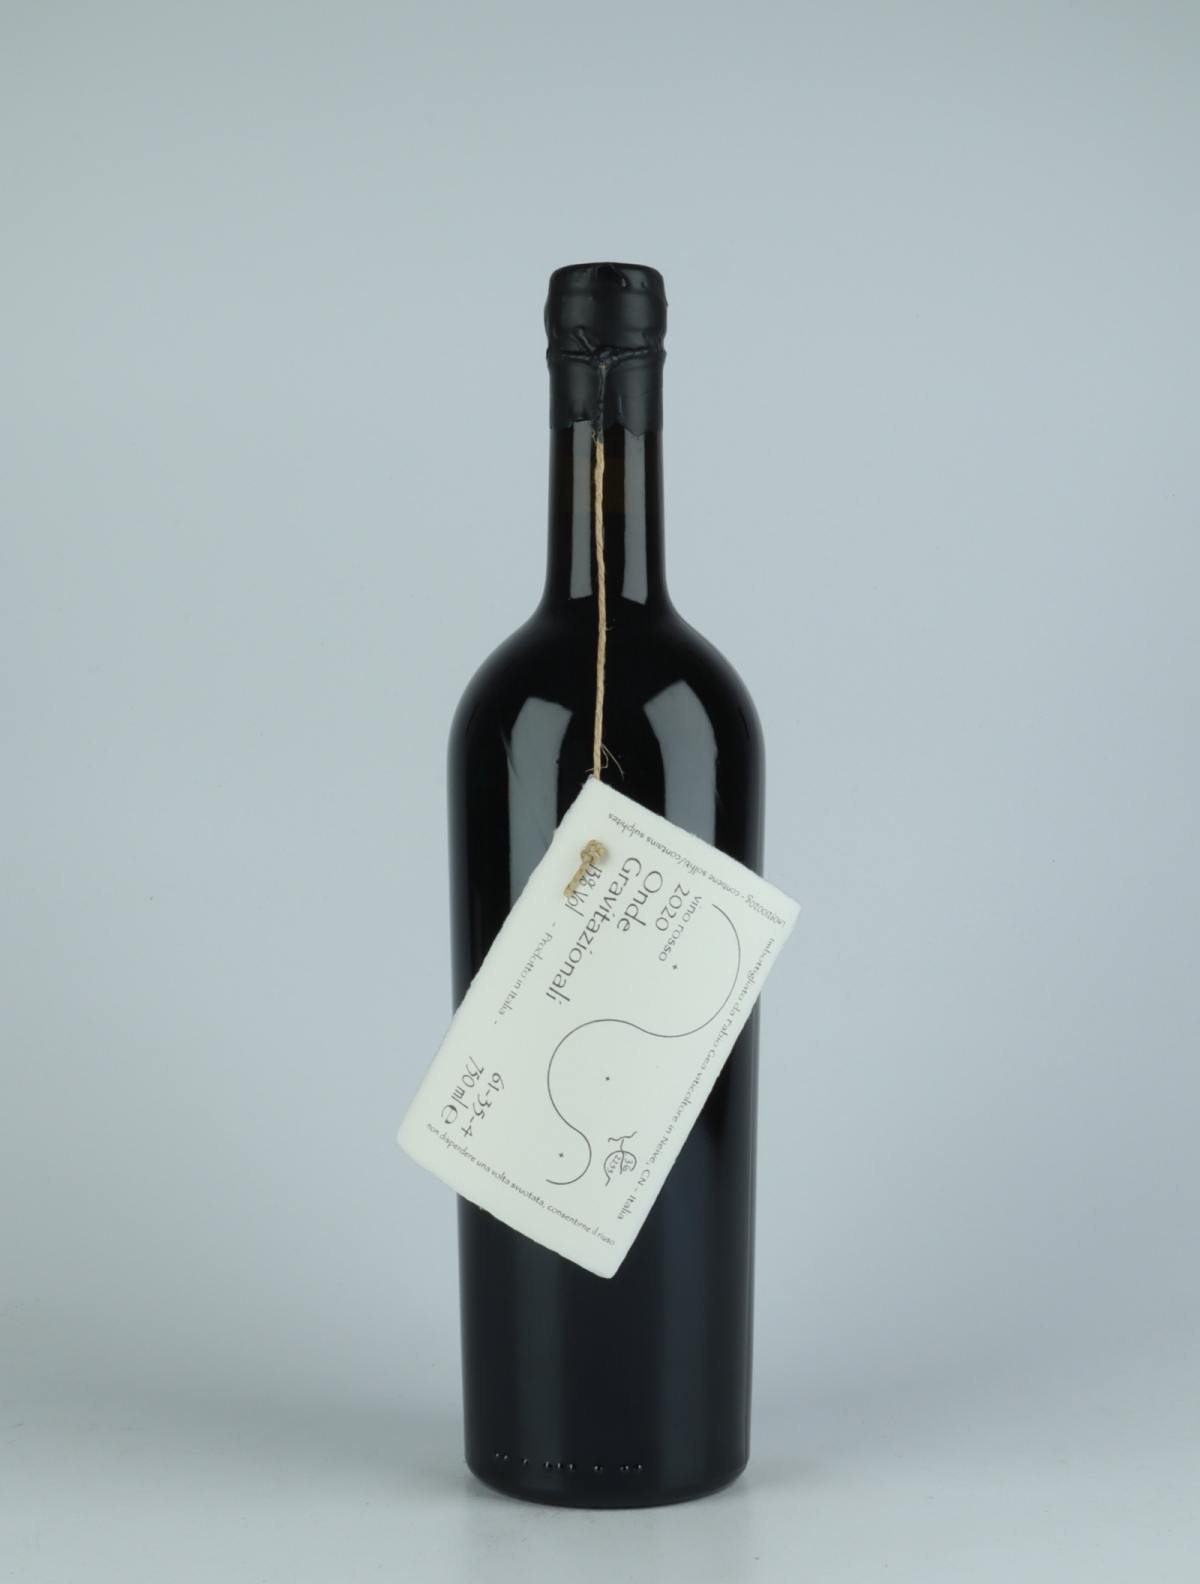 En flaske 2020 Onde Gravitazionali Rødvin fra Fabio Gea, Piemonte i Italien